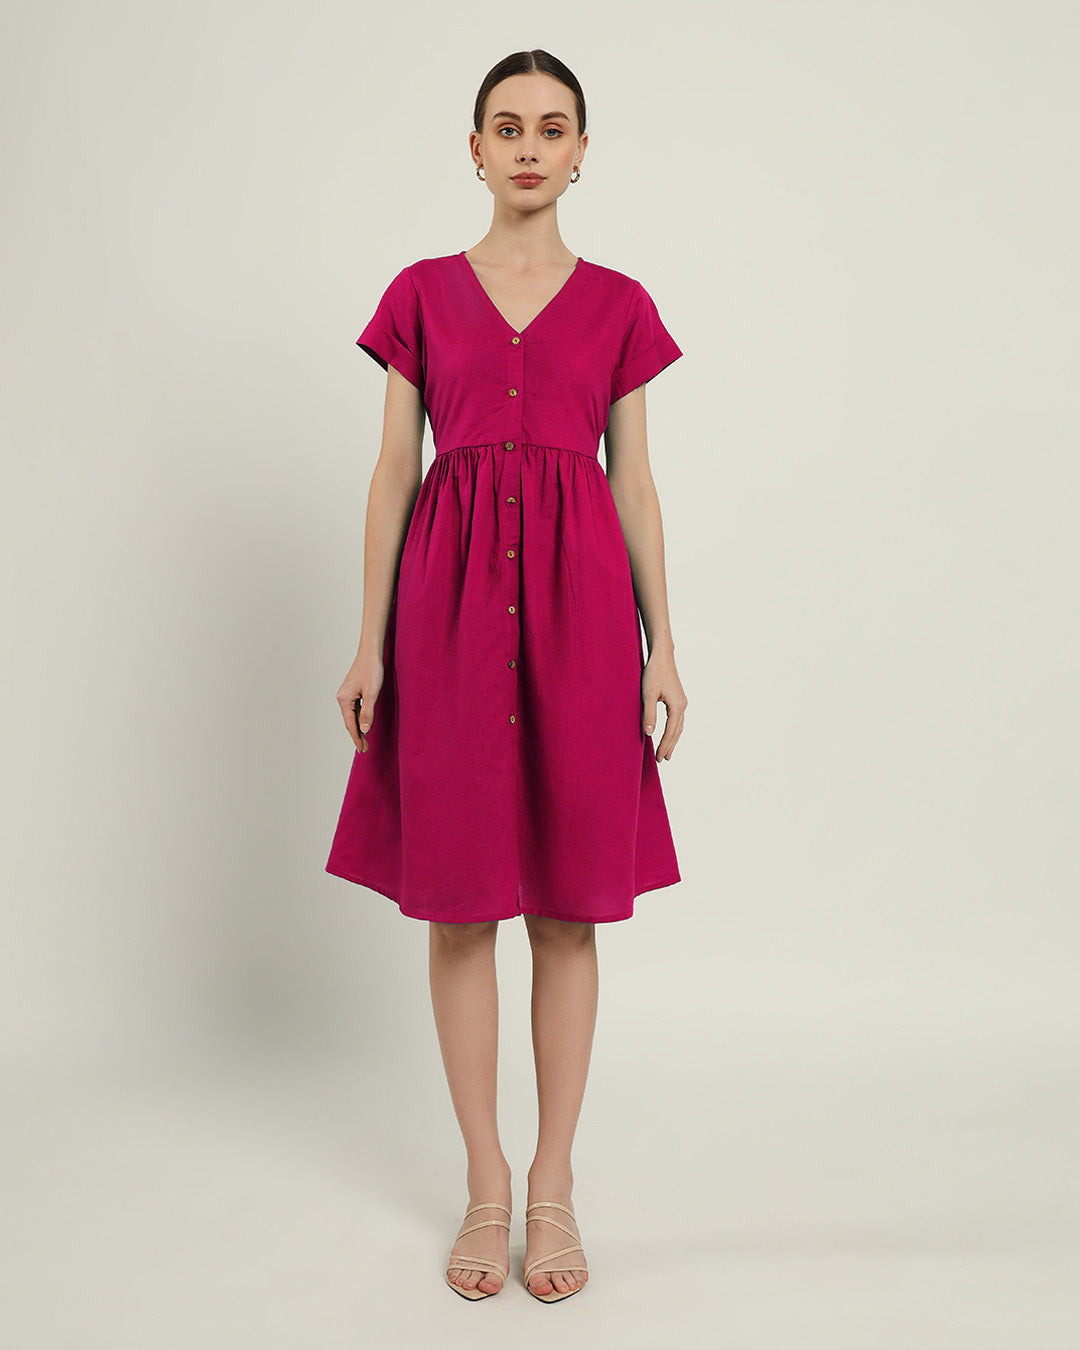 The Valence Berry Cotton Dress